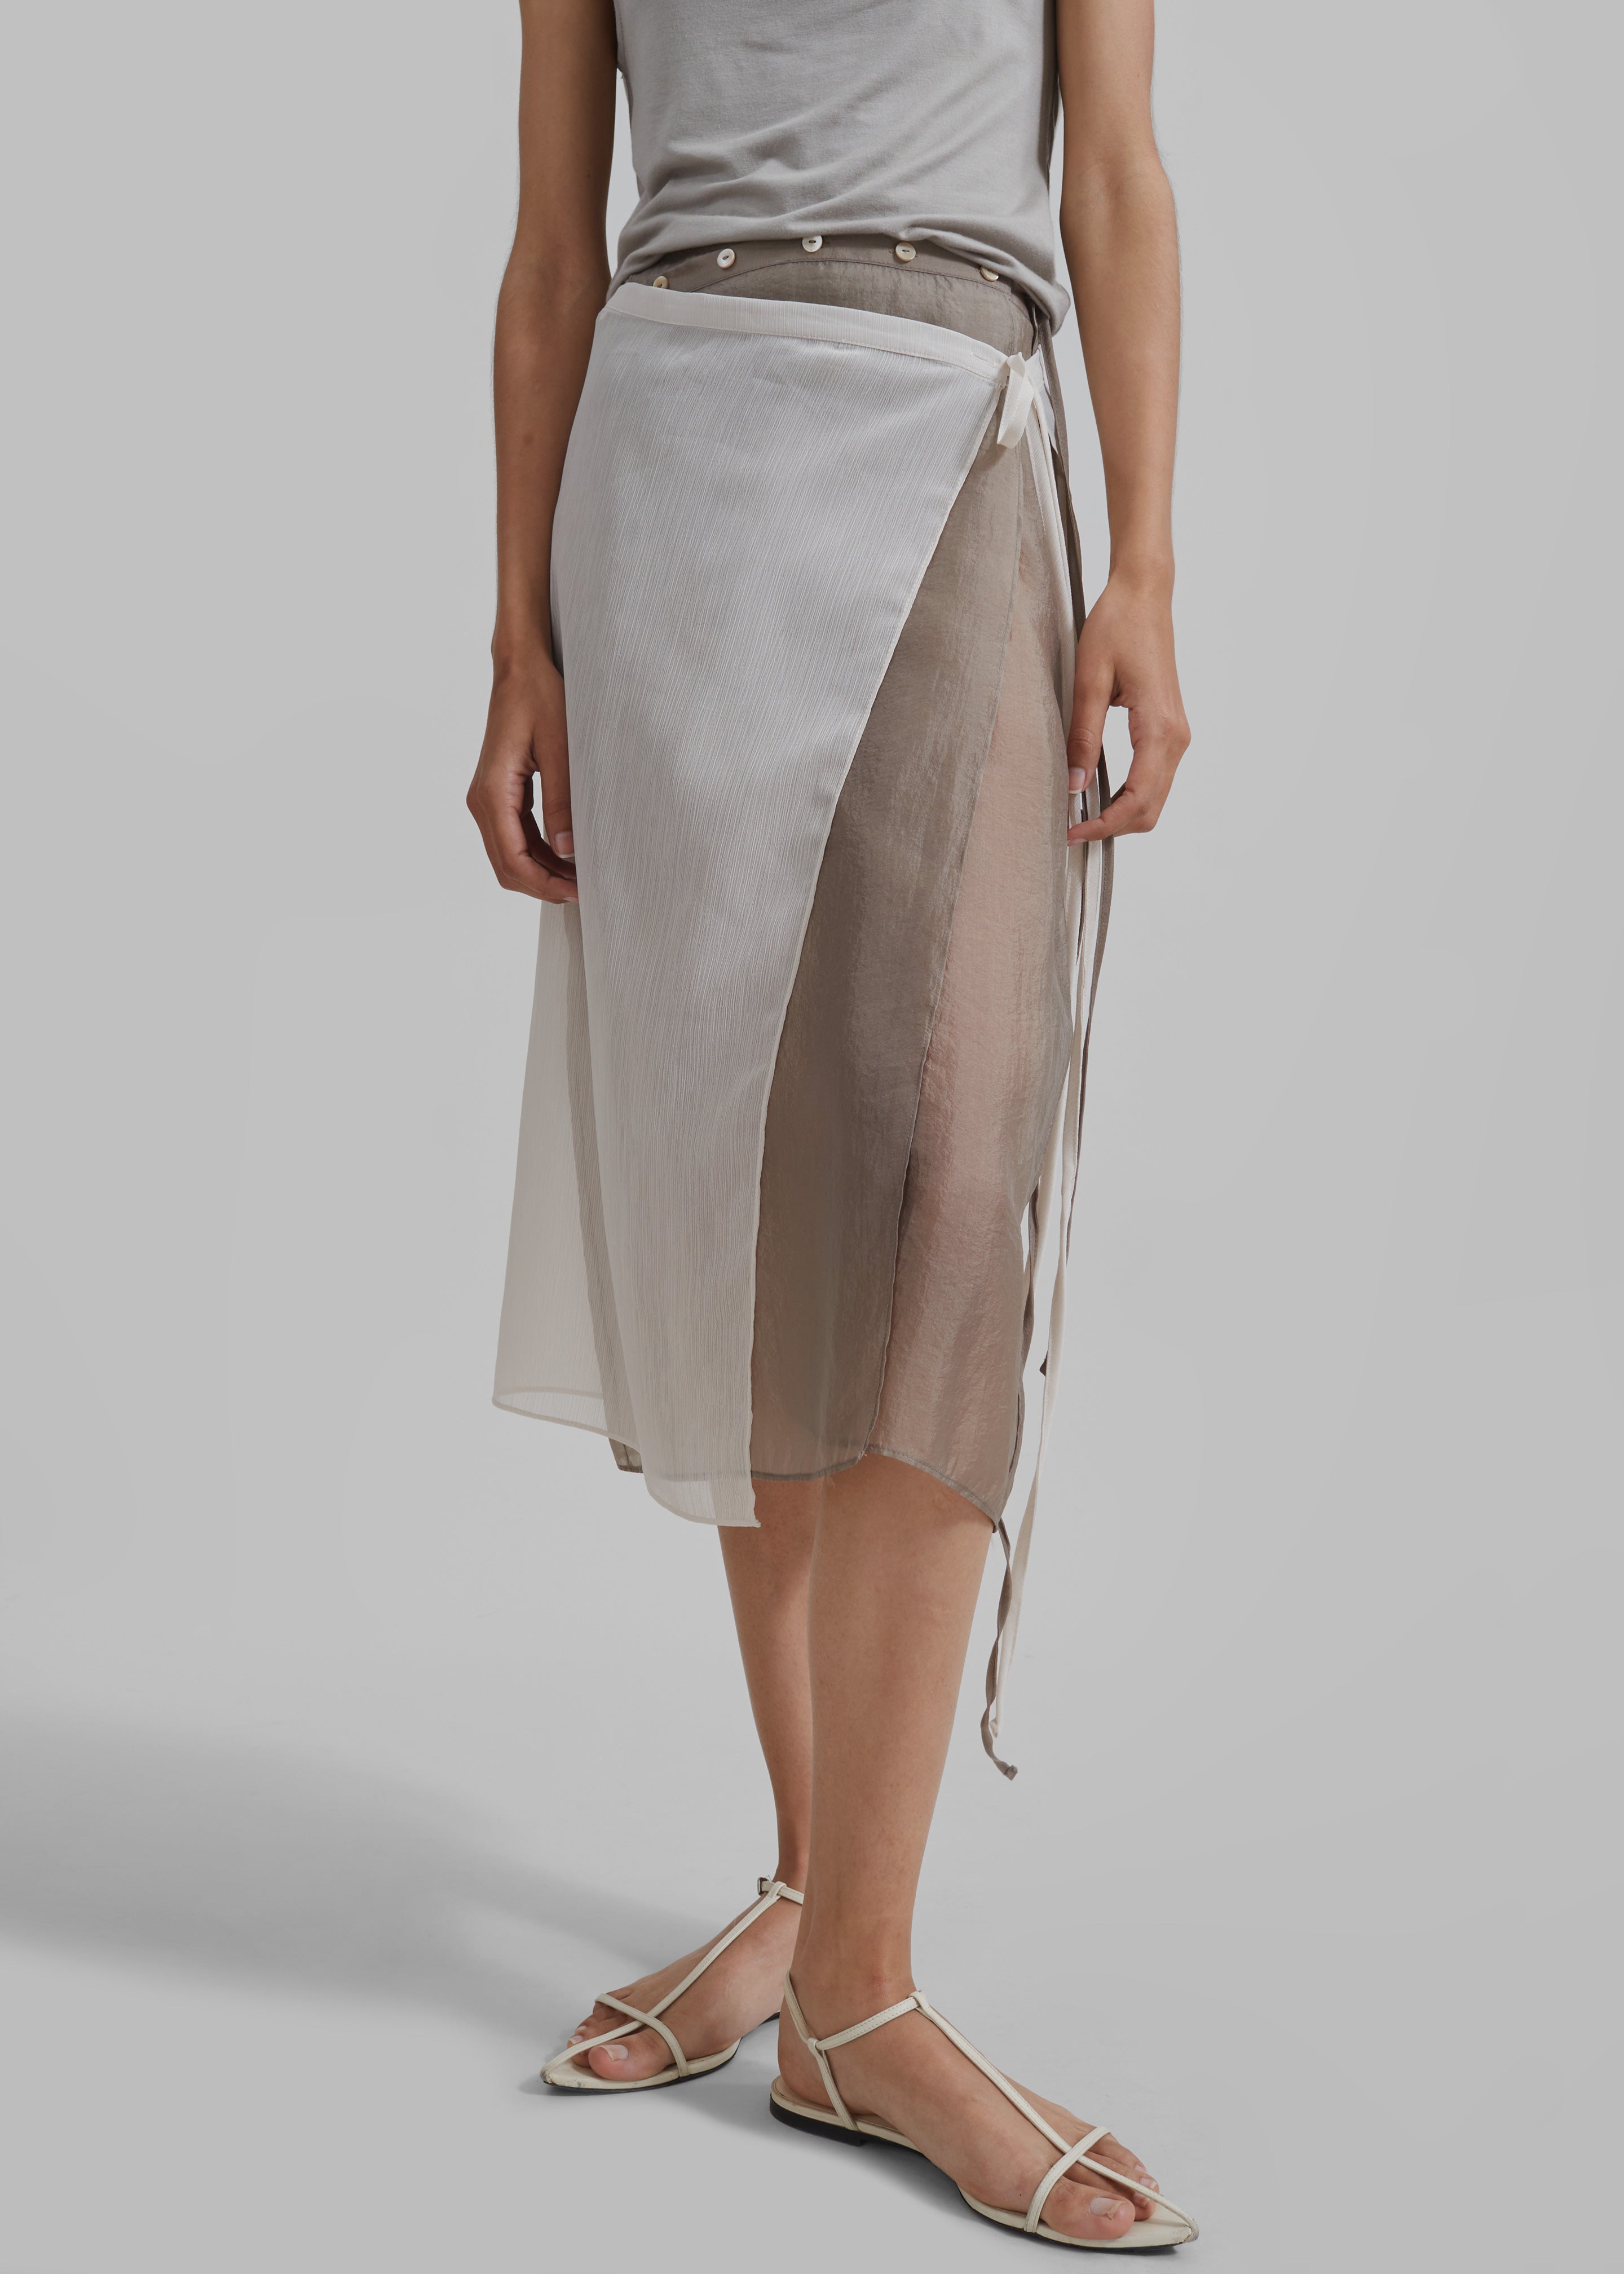 Tia Sheer Layered Skirt - Beige - 5